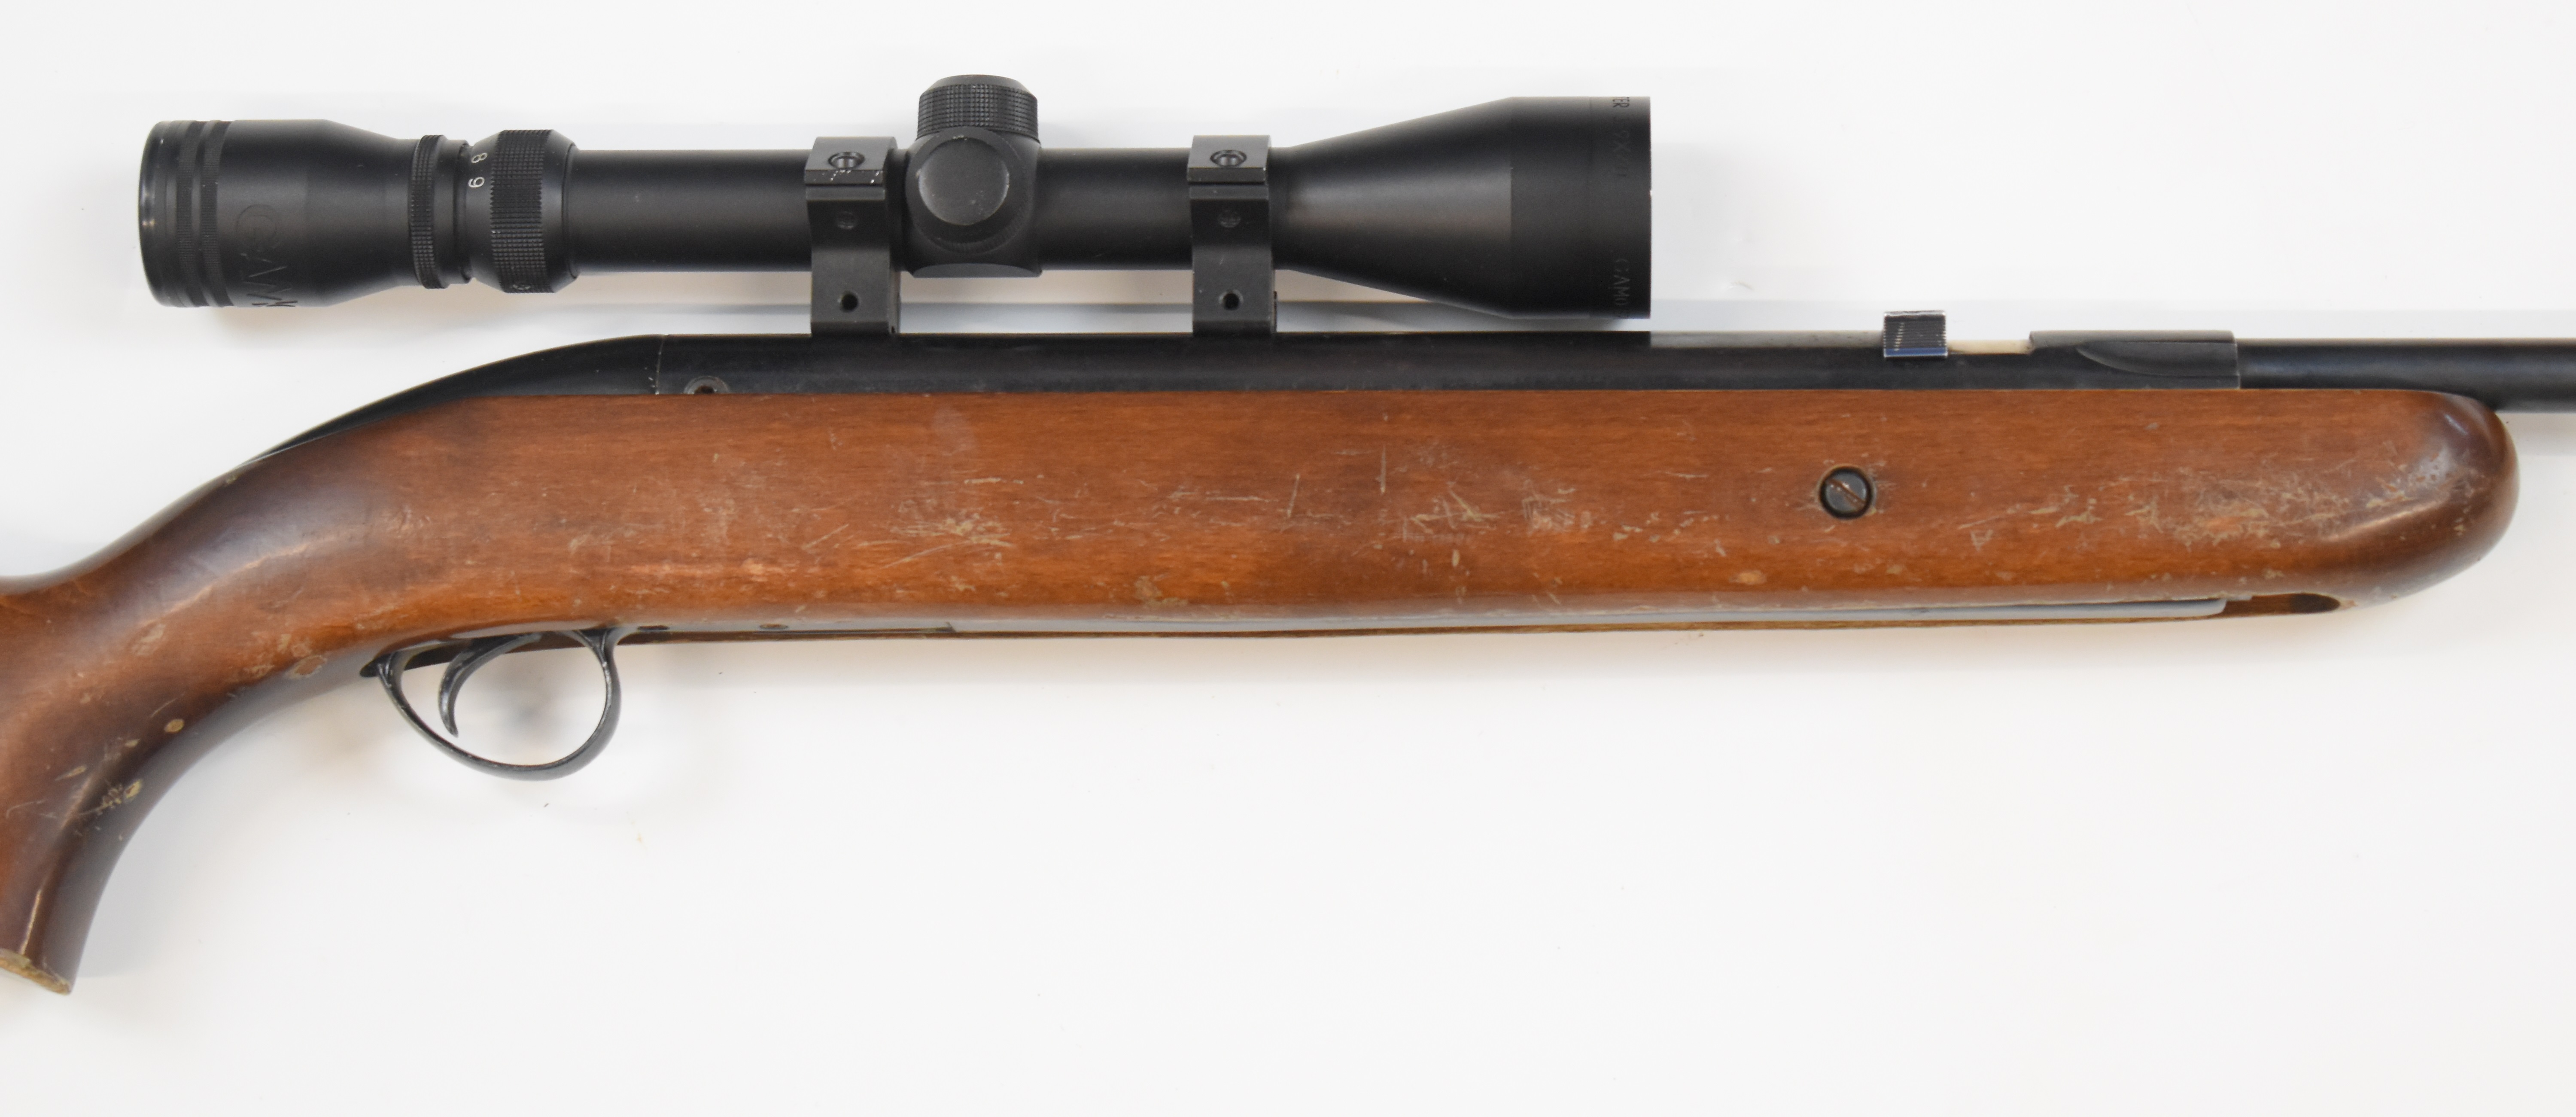 BSA Airsporter RB2 .22 under-lever air rifle with semi-pistol grip, raised cheek piece, sound - Image 4 of 9